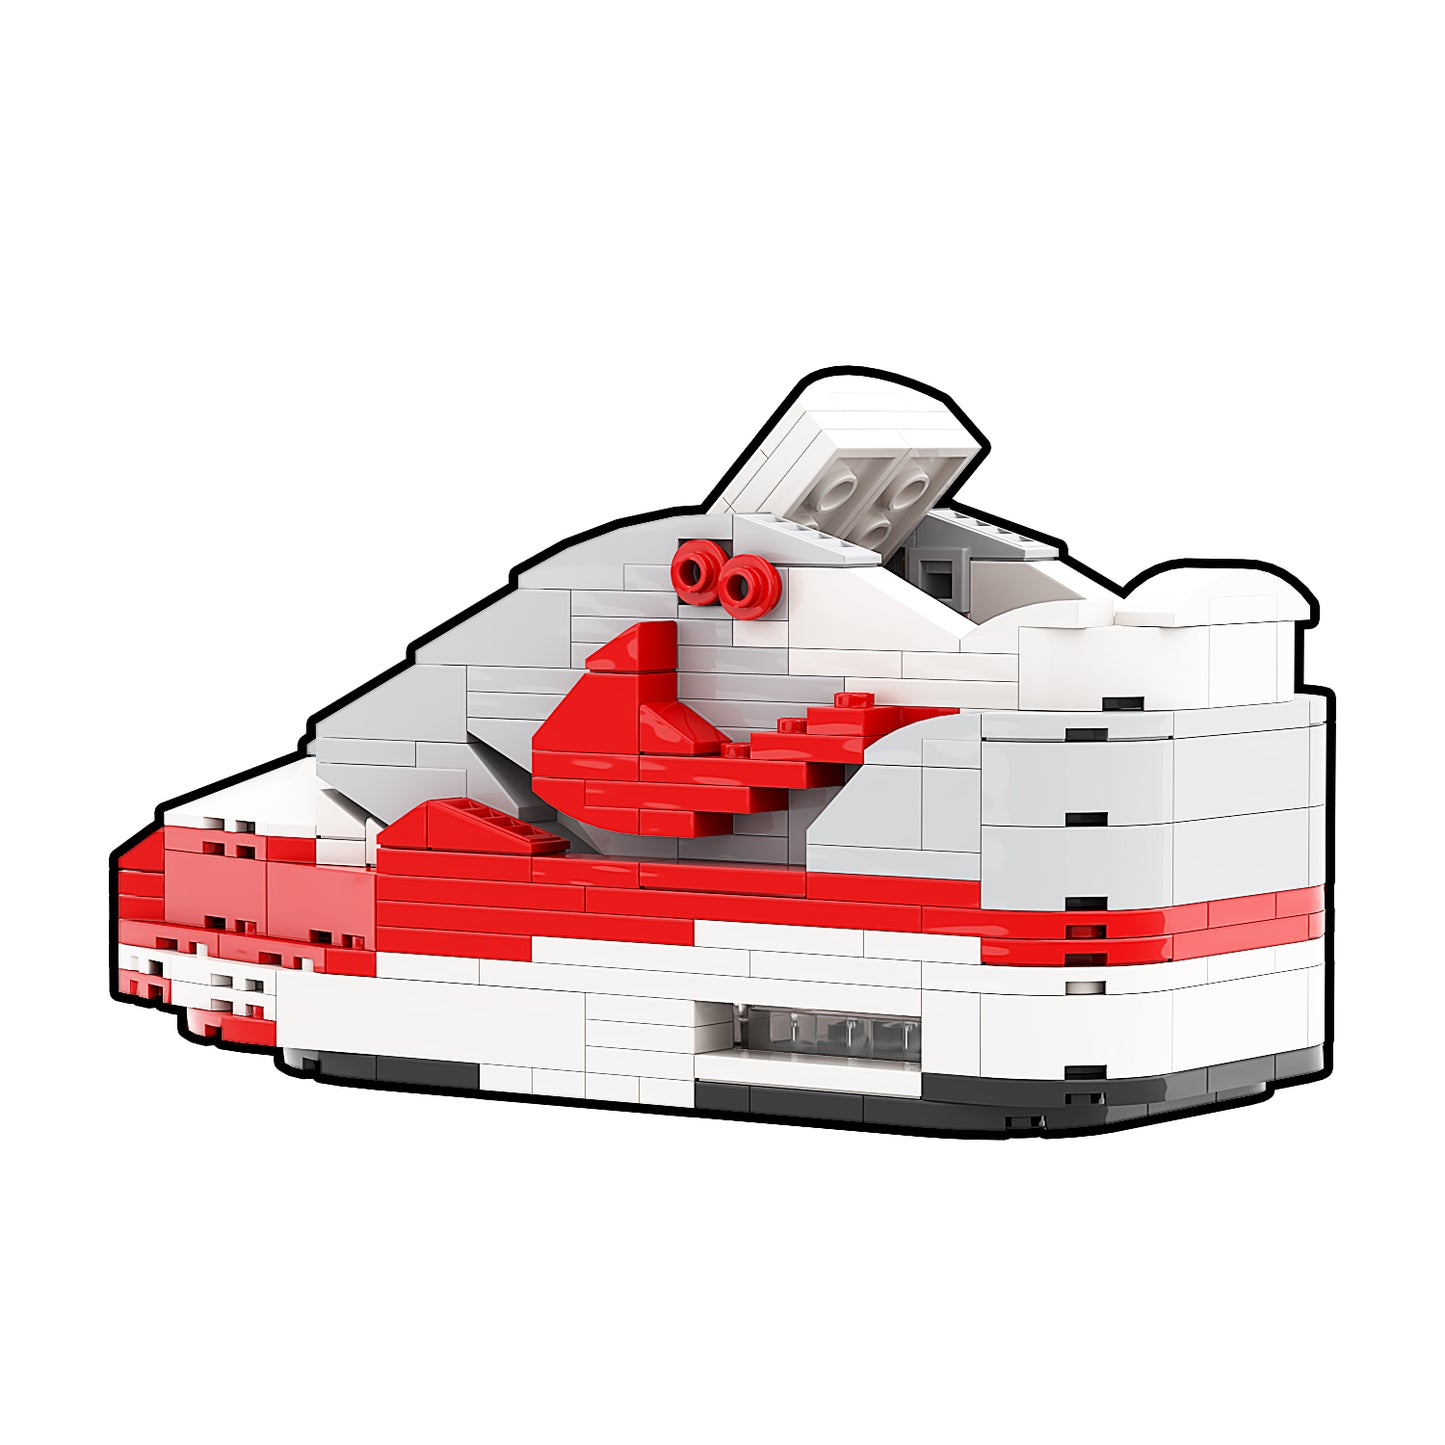 REGULAR "Air Max 1 OG" Sneaker Bricks with Mini Figure